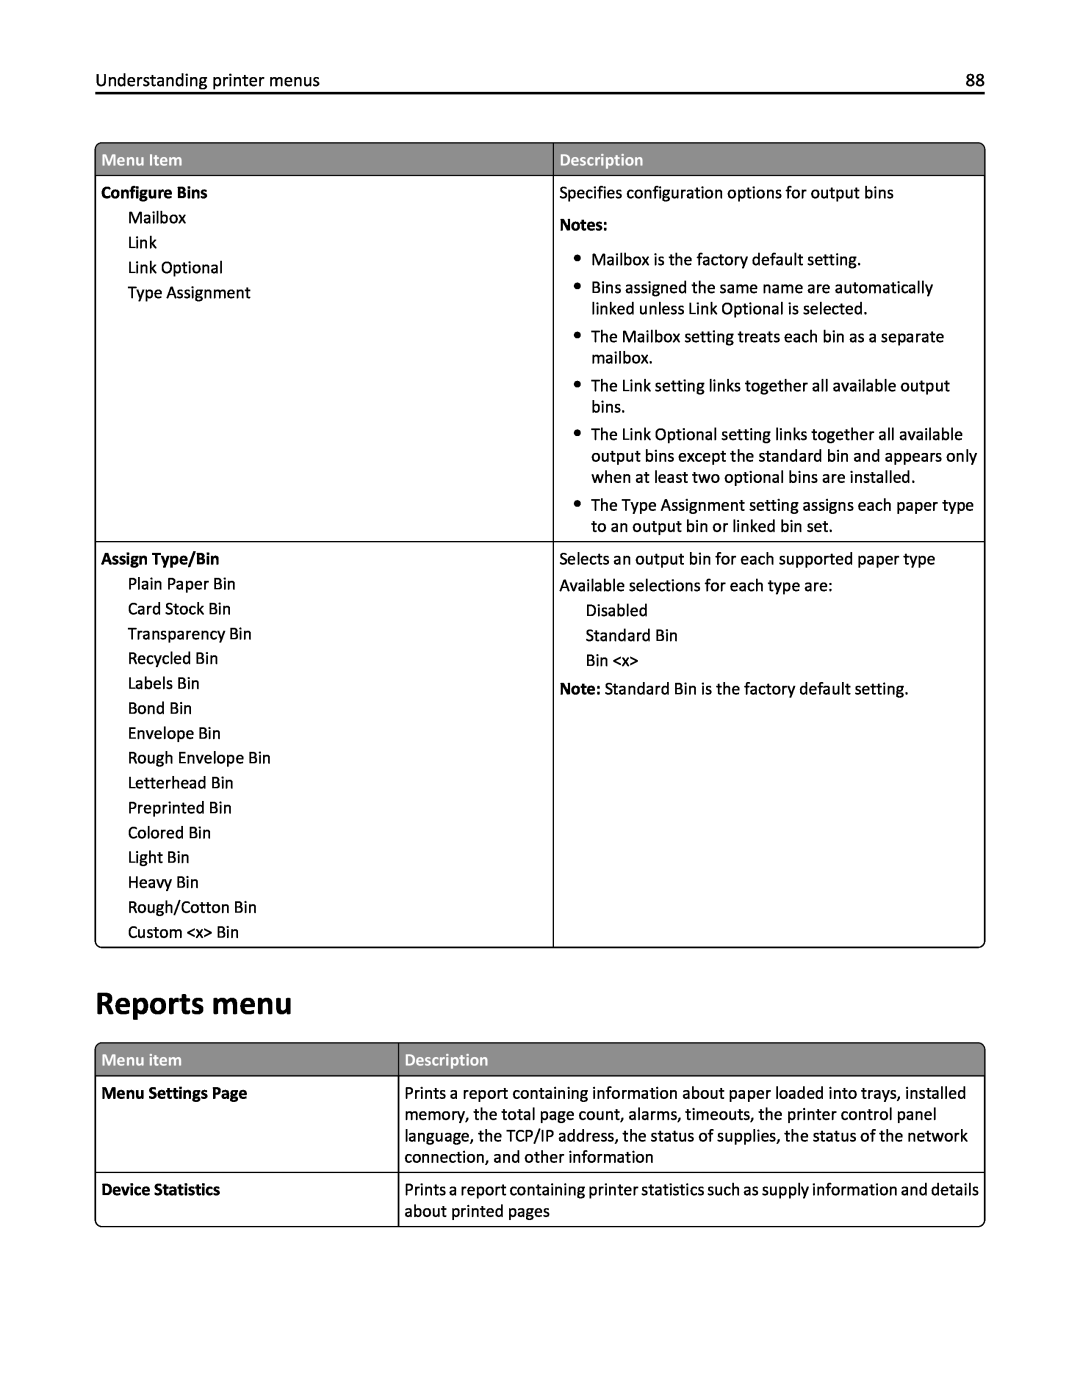 Lexmark W850DN, 110, 19Z0301 manual Reports menu, Menu Item, Description, Menu item 